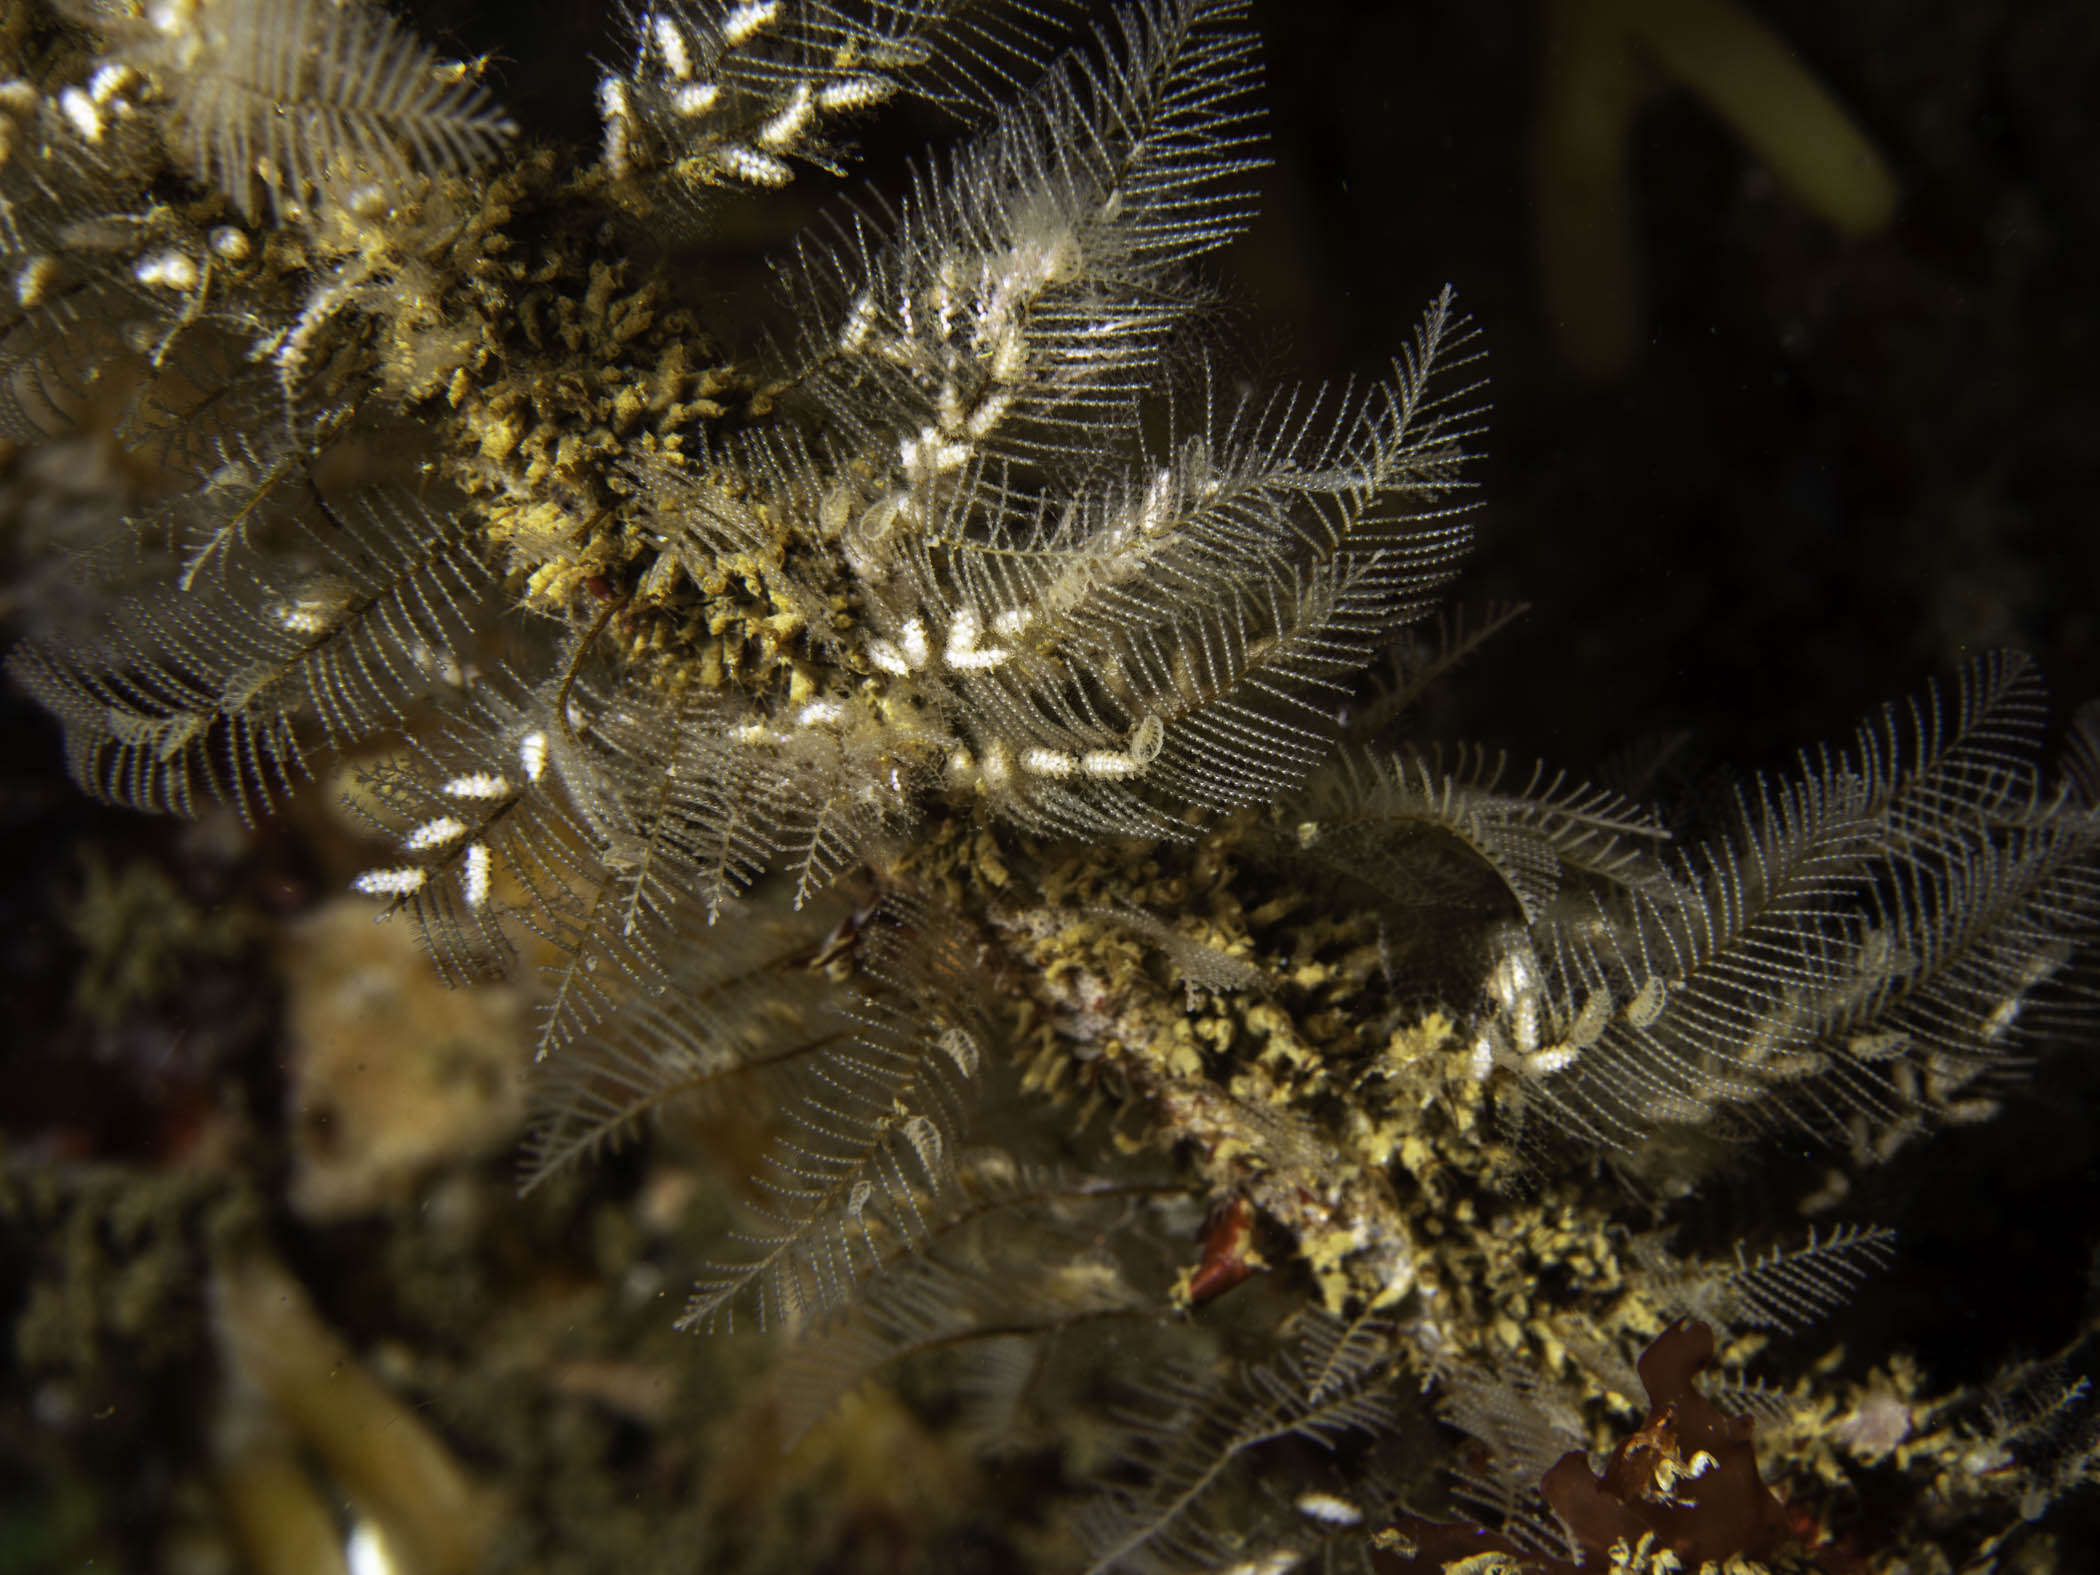 image: Aglaophenia pluma. Growing on a kelp stipe, Connemara, 2019.